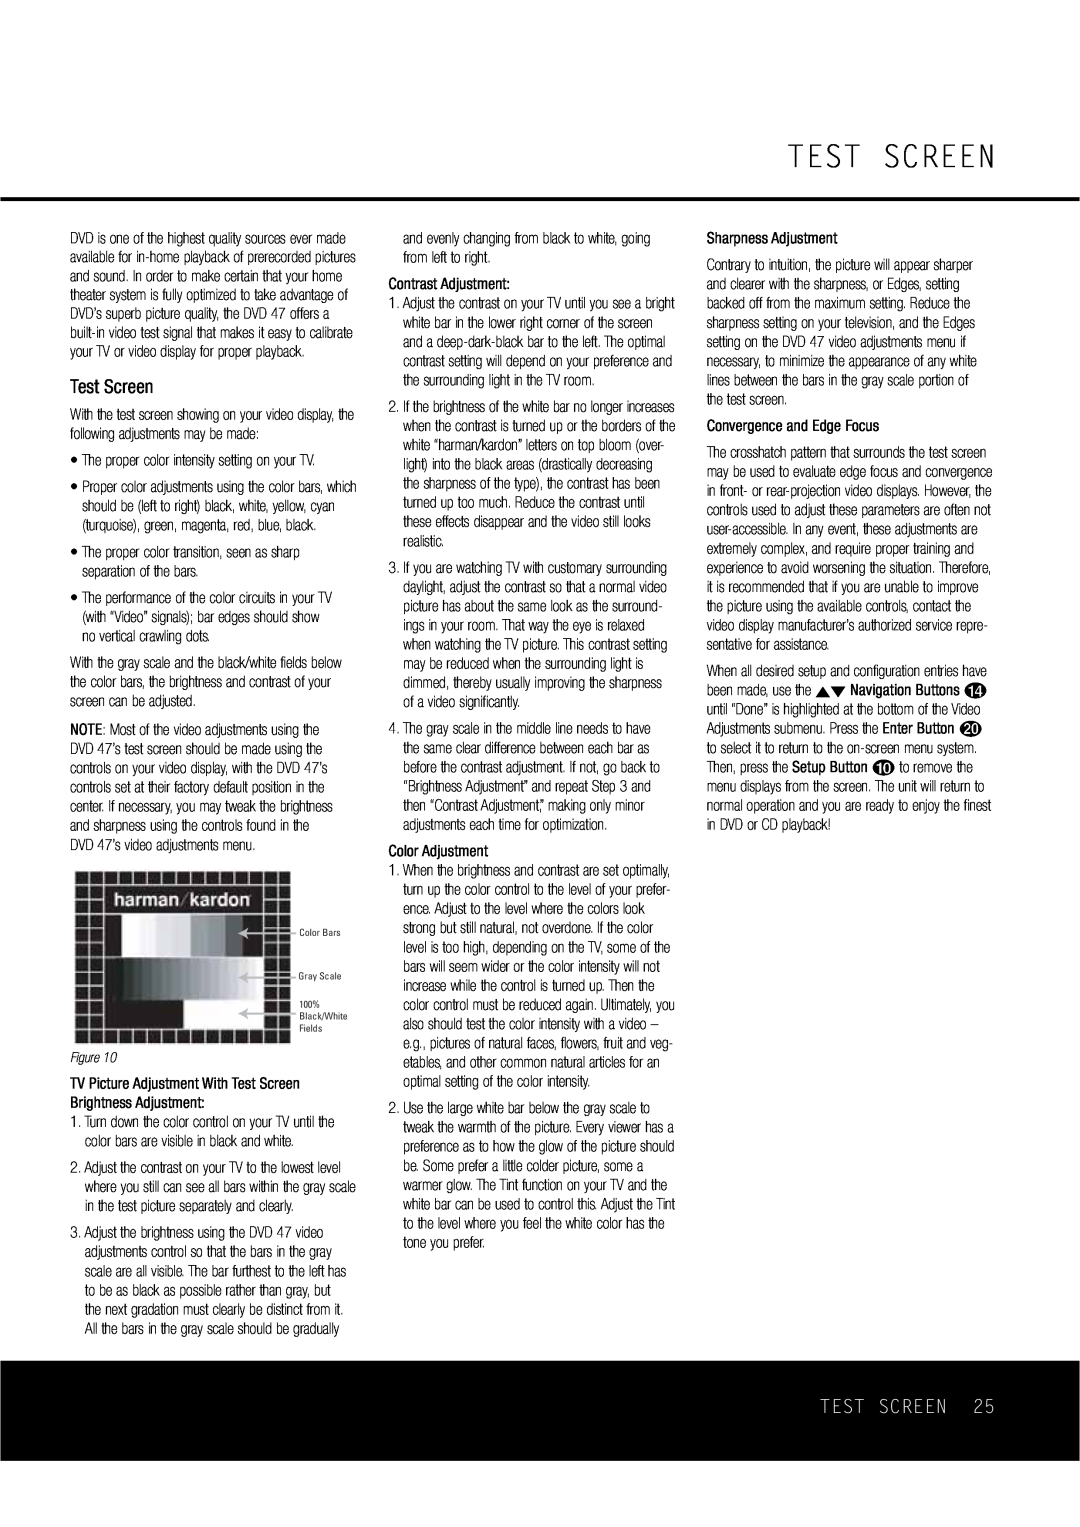 Harman-Kardon DVD47 owner manual Test Screen 